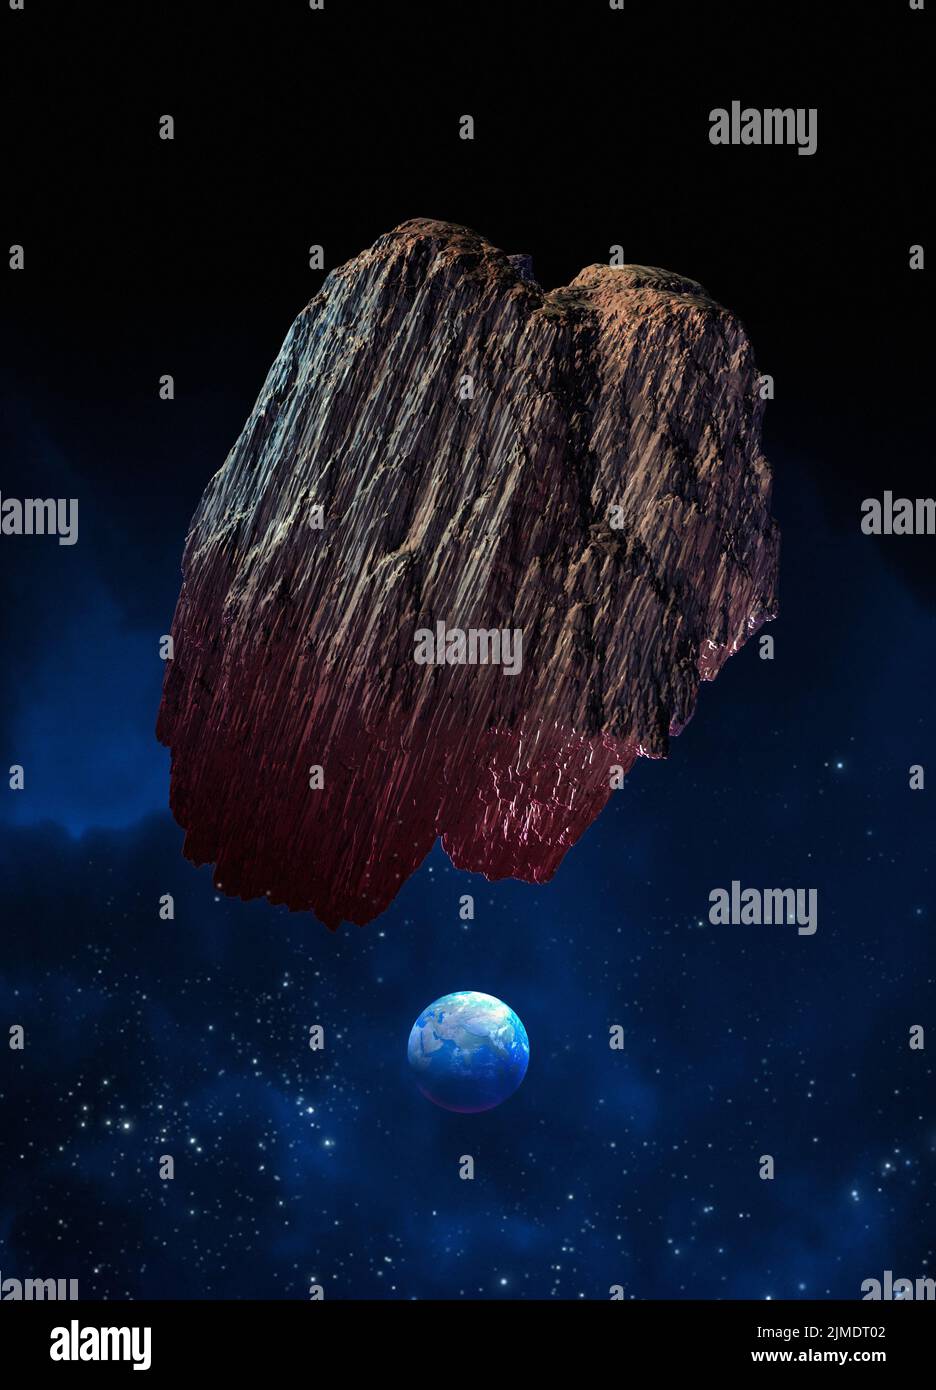 Large asteroid heading towards Earth, illustration Stock Photo